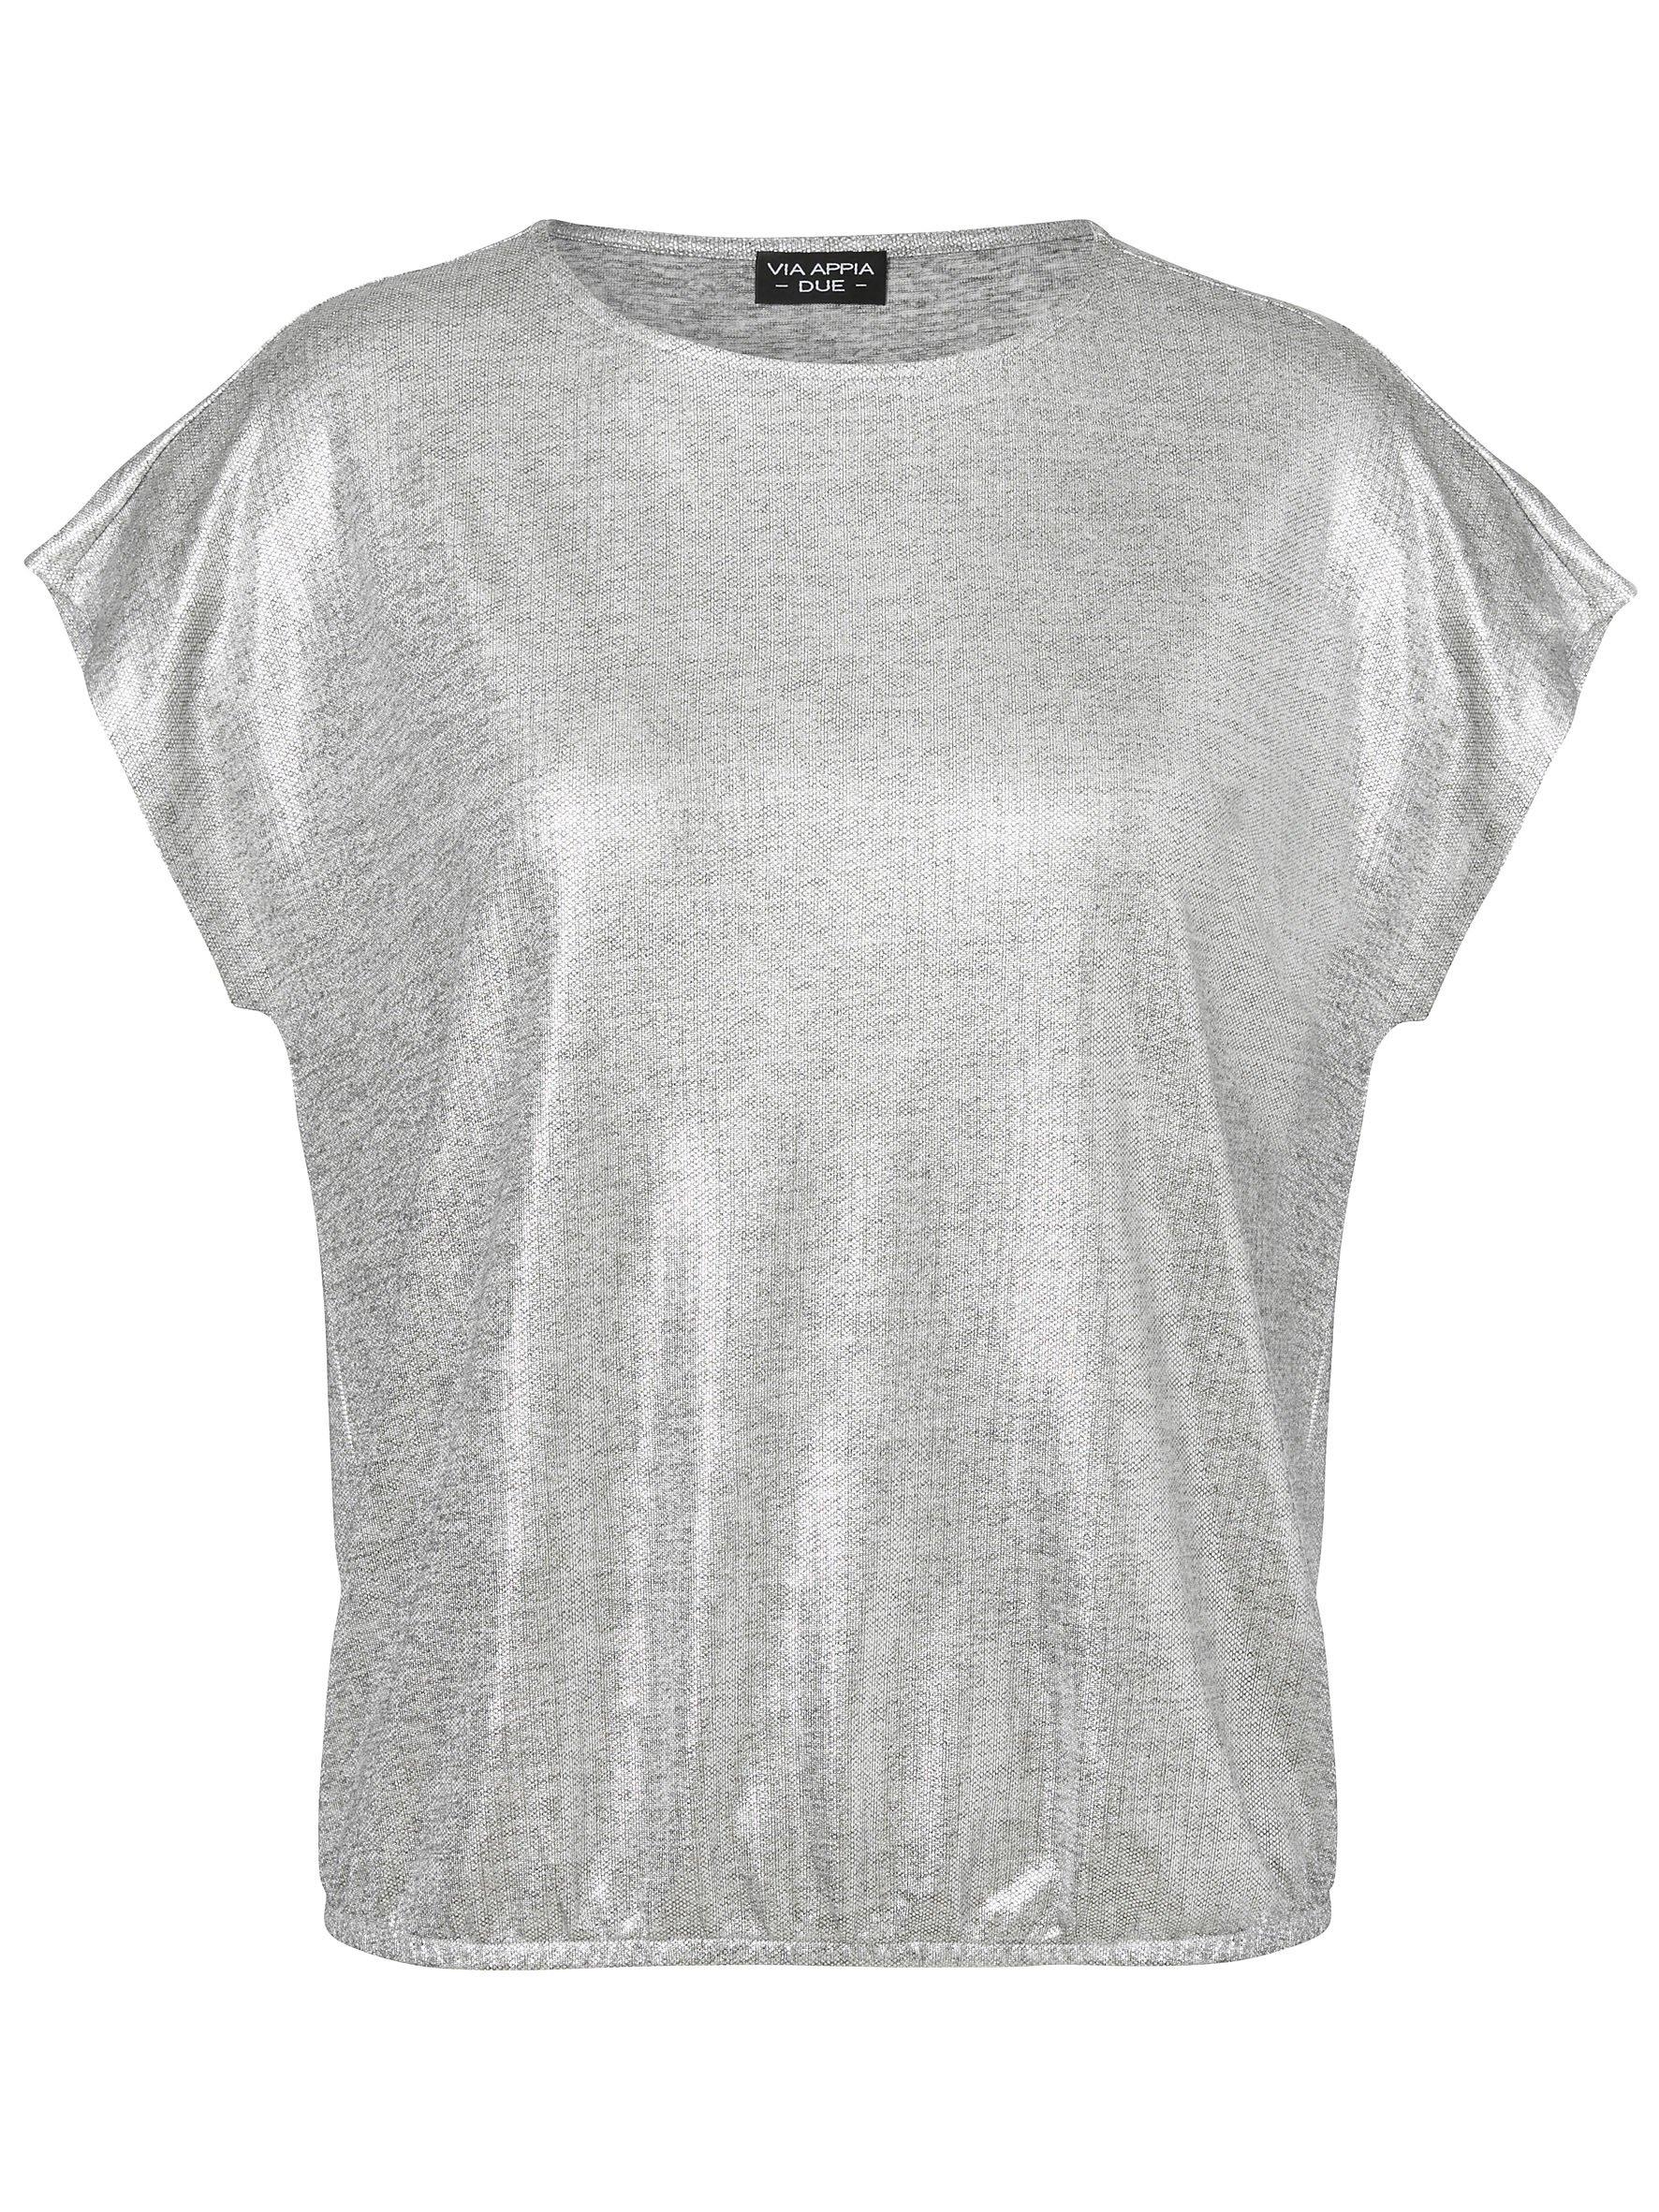 Große Größen: Shirt mit schimmerndem Foliendruck, silber, Gr.42-54 product